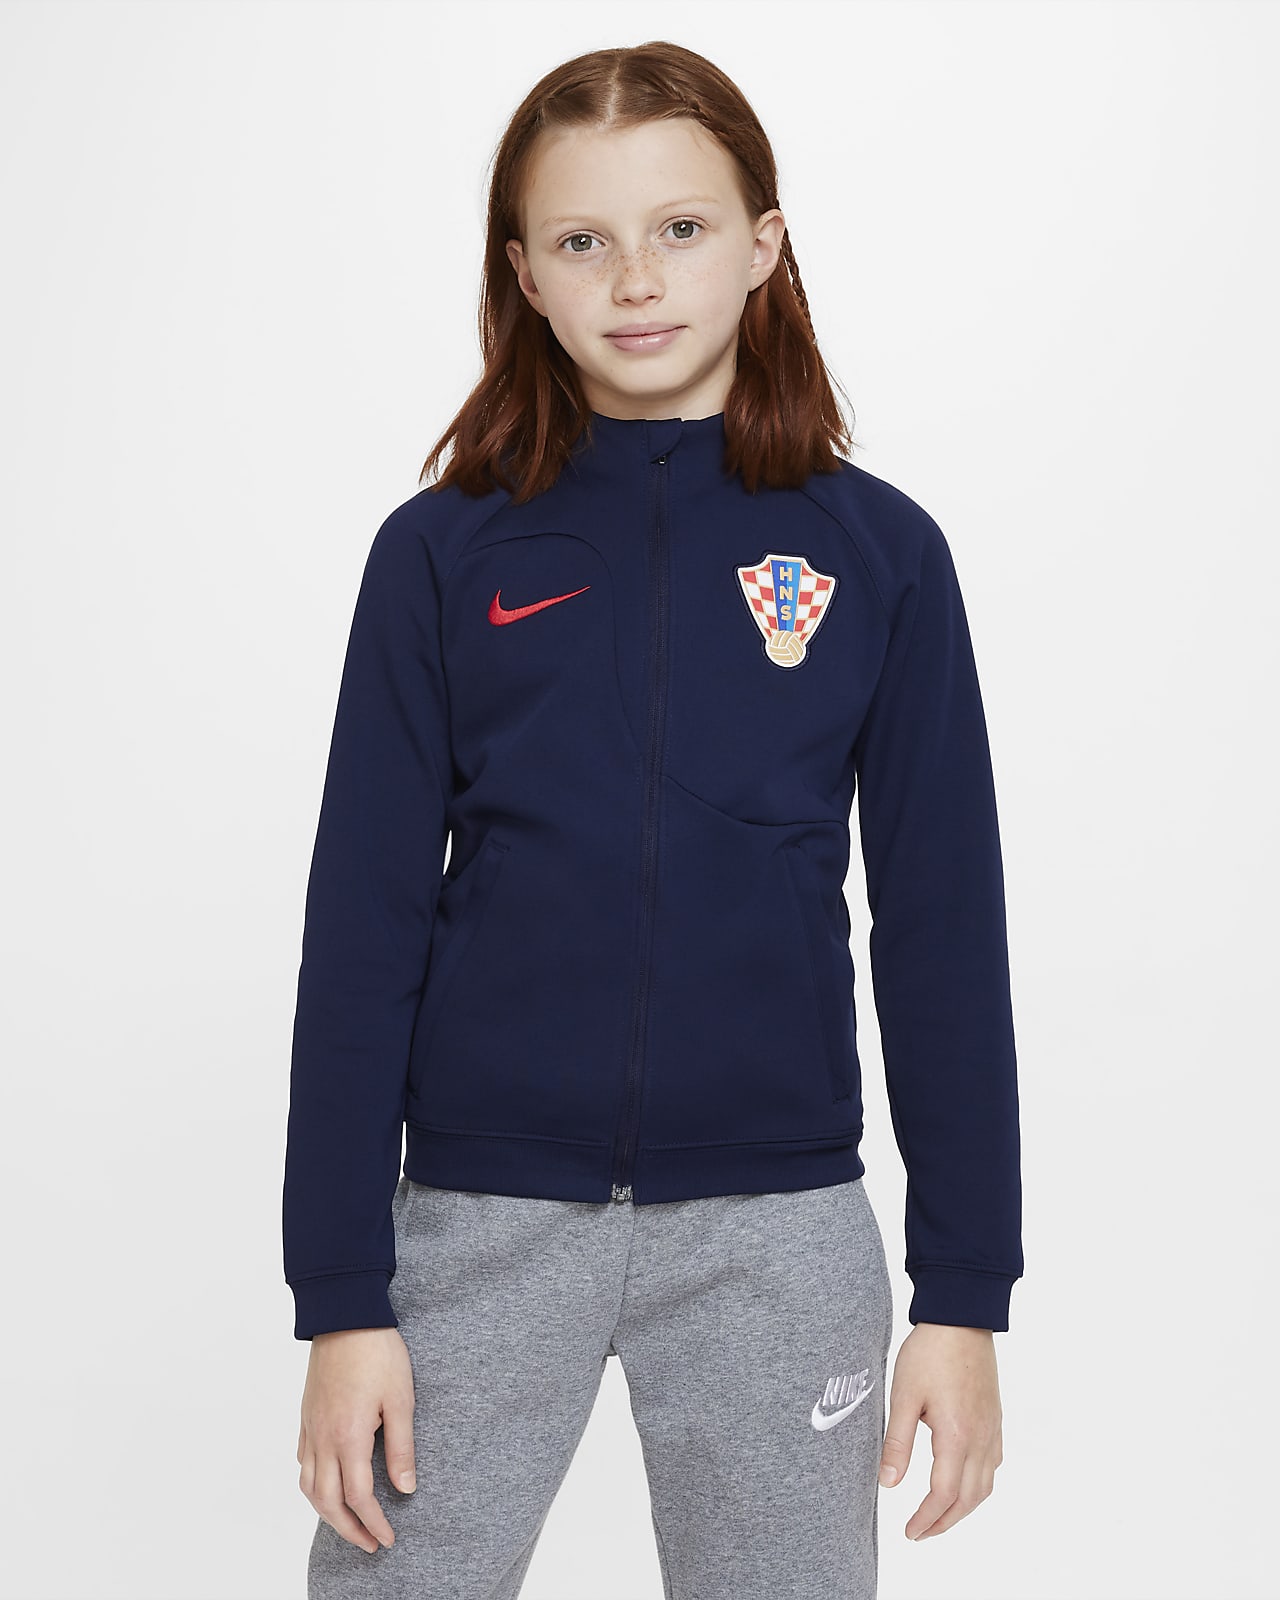 exégesis Todo tipo de Inquieto Croacia Academy Pro Chaqueta de fútbol Nike - Niño/a. Nike ES